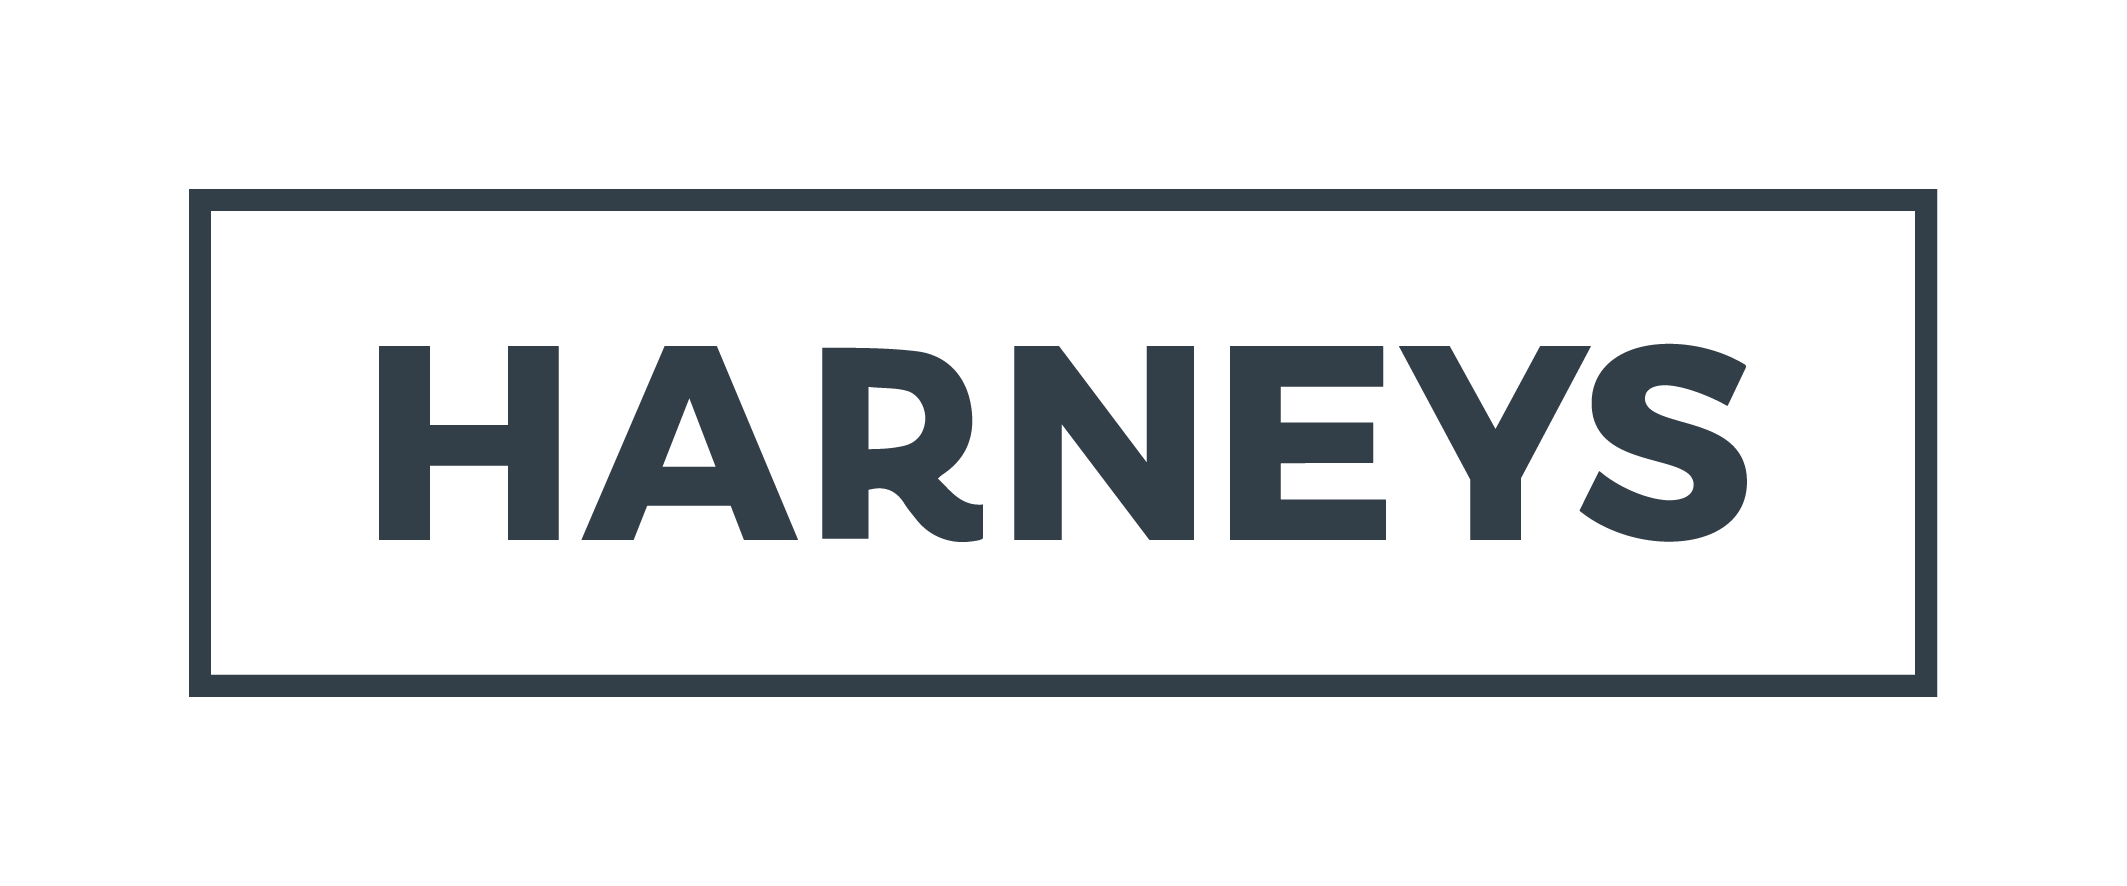 Harney-Westwood-&-Riegels-Harneys-衡力斯律师事务所